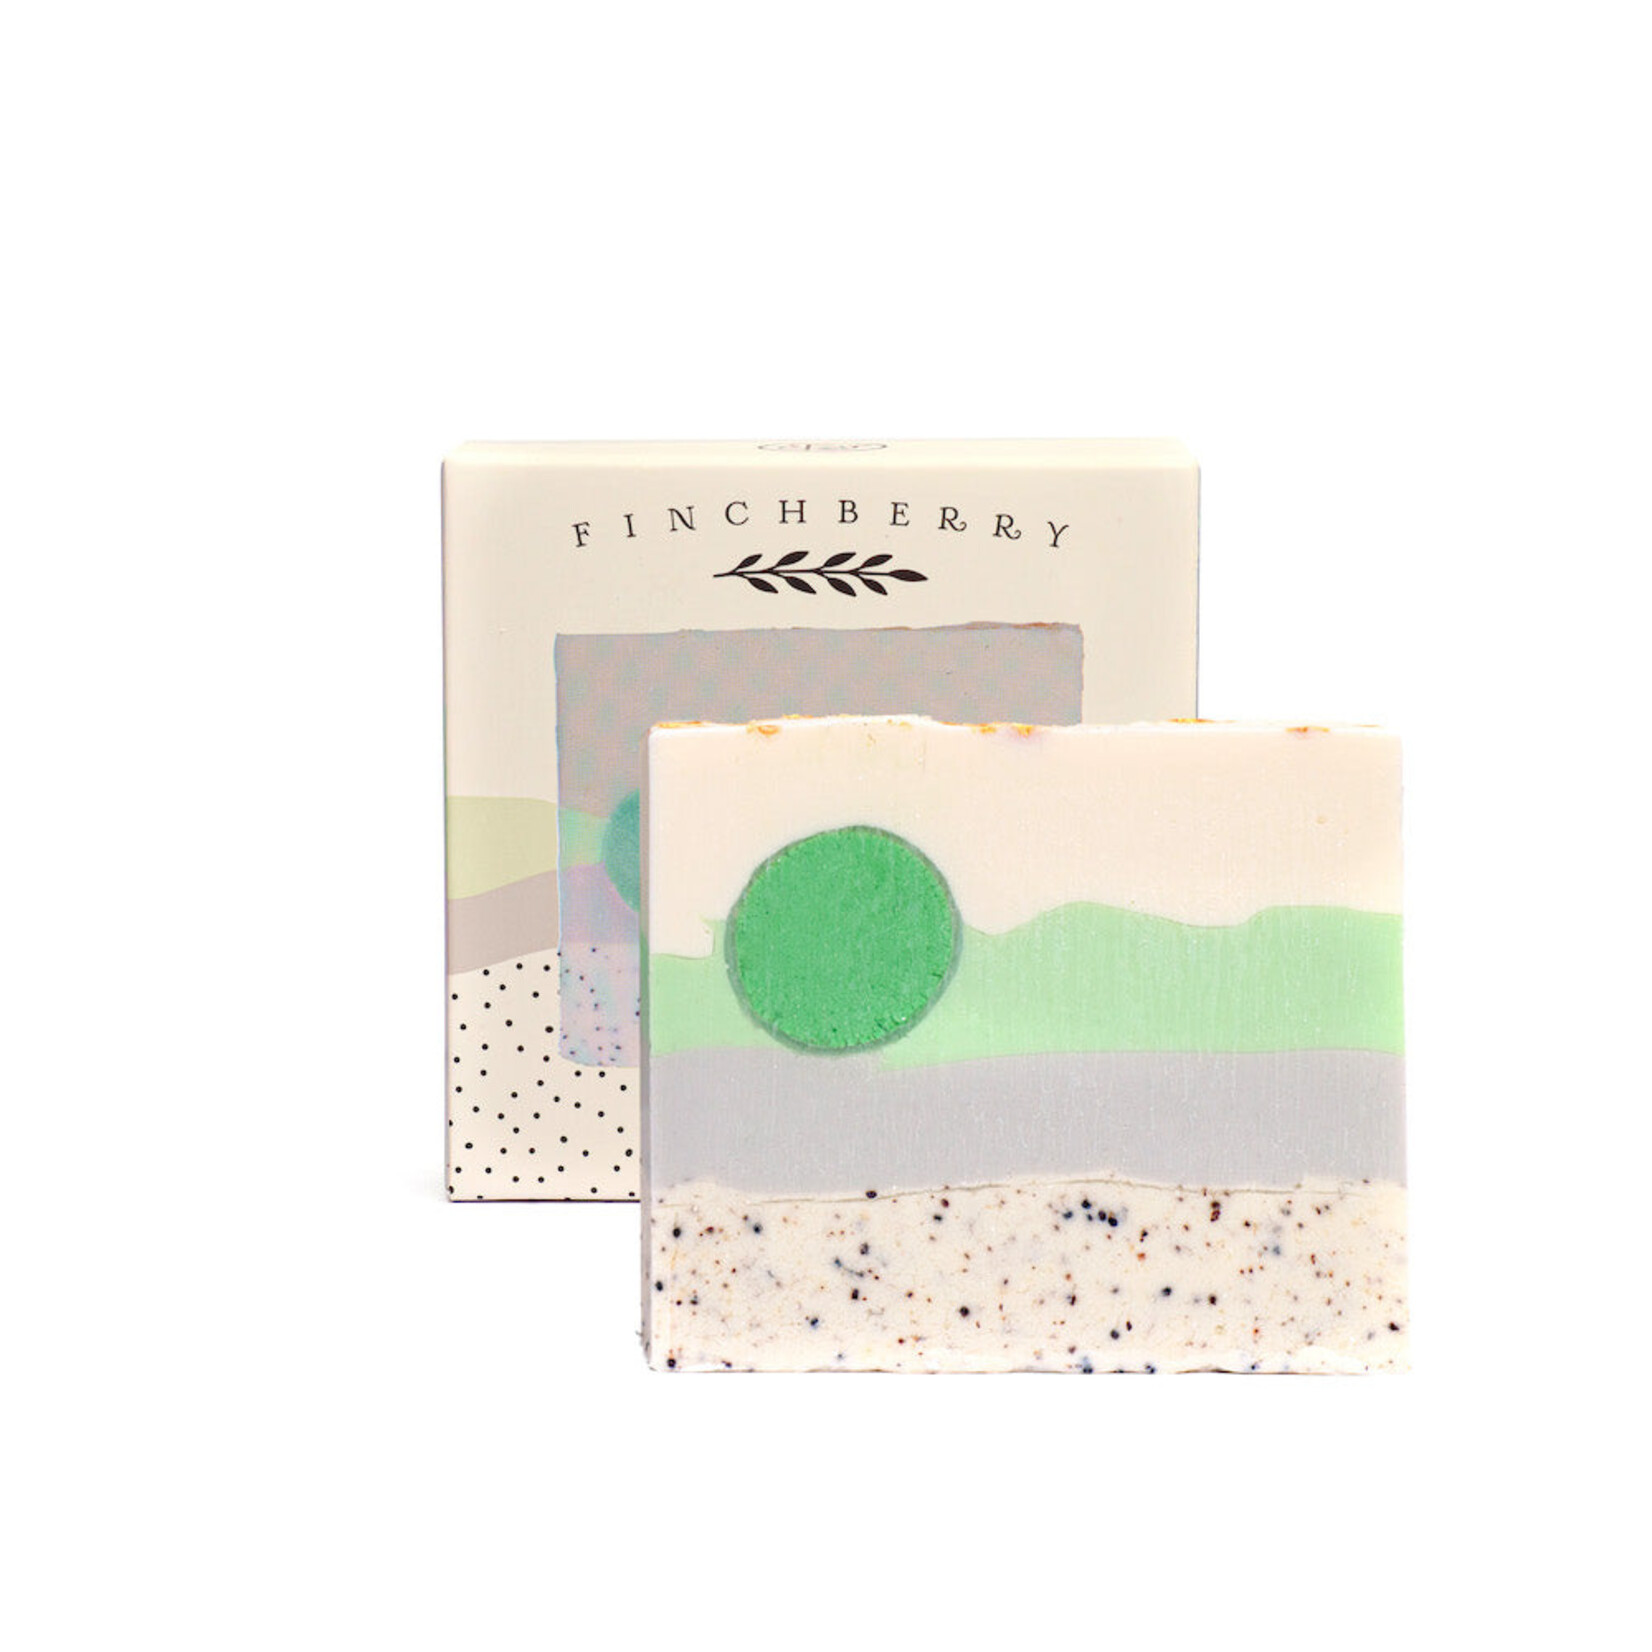 Finch Berry Ozone-Handmade Vegan Soap